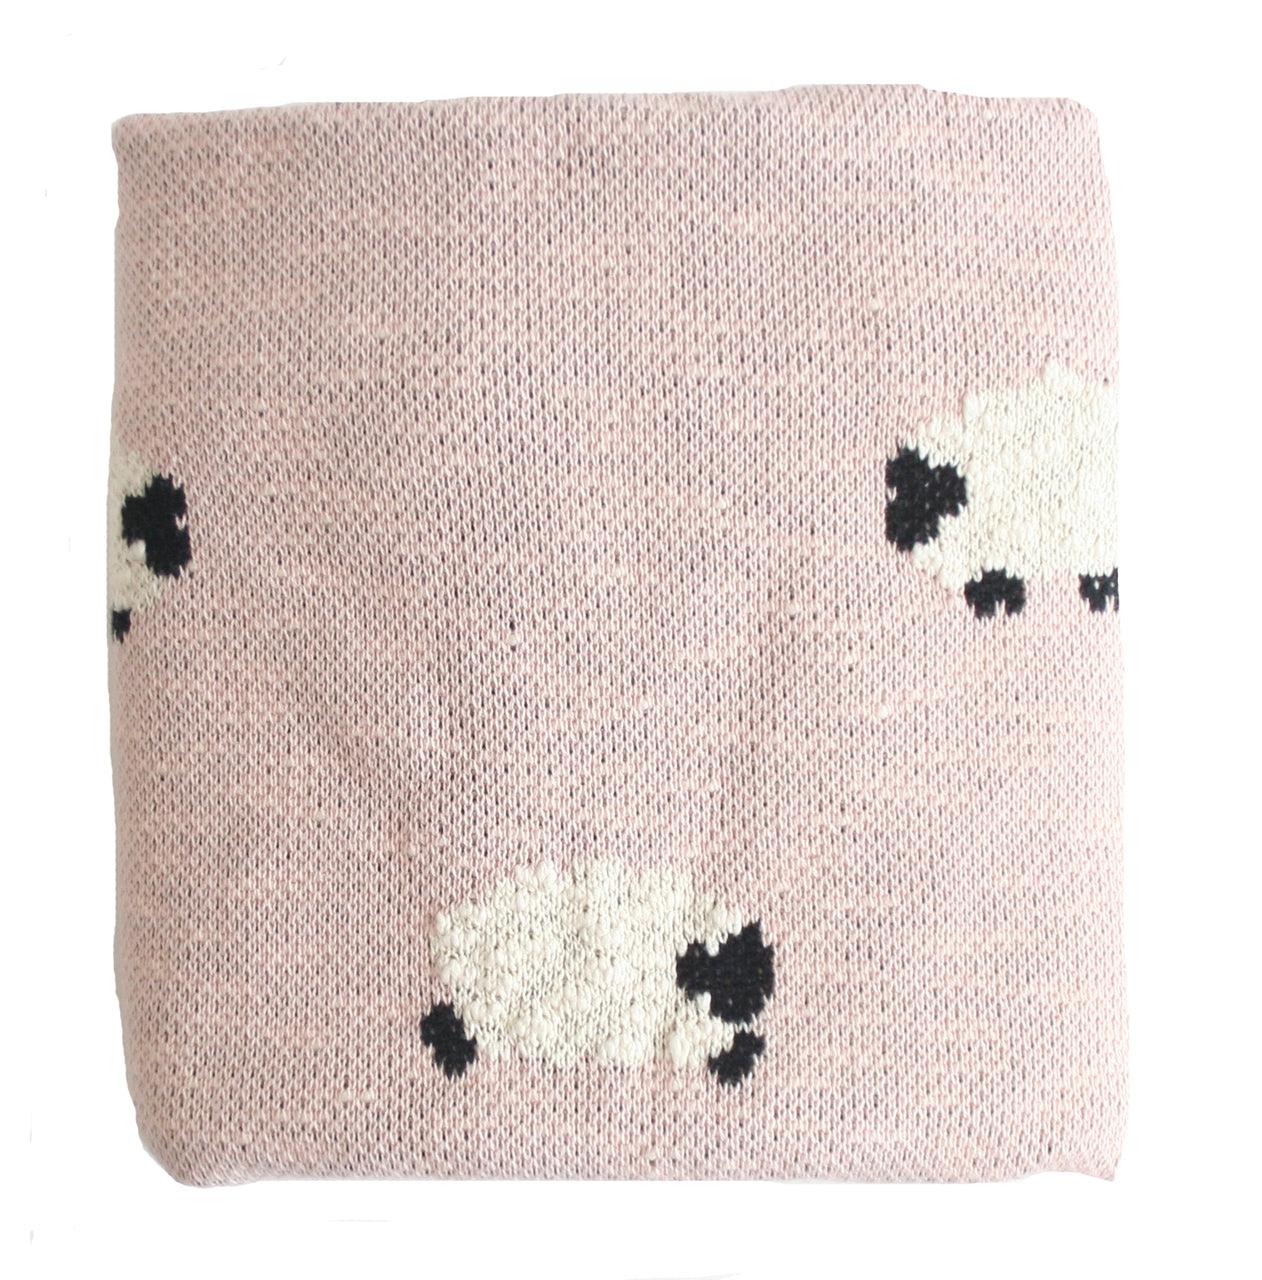 Alimrose 'Baa Baa" Organic Knit Blanket -Pink